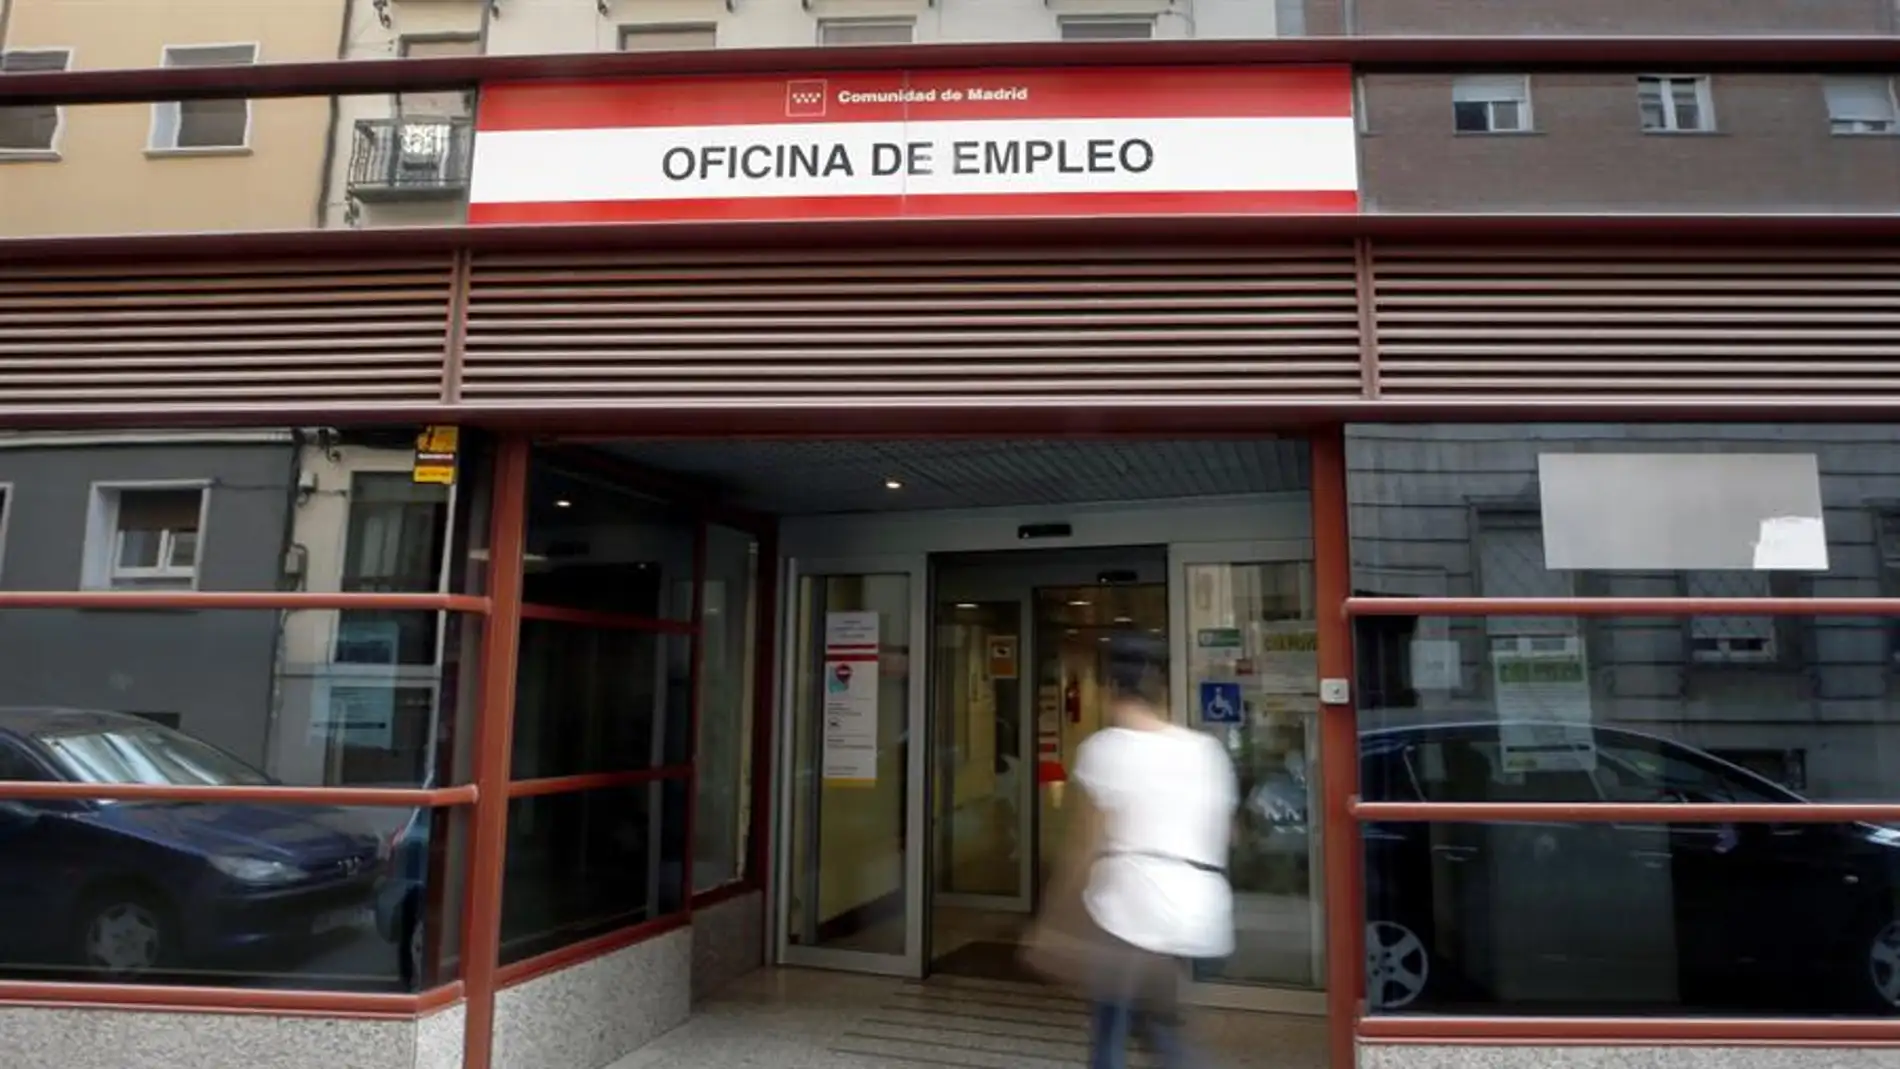 Oficina de empleo / Efe